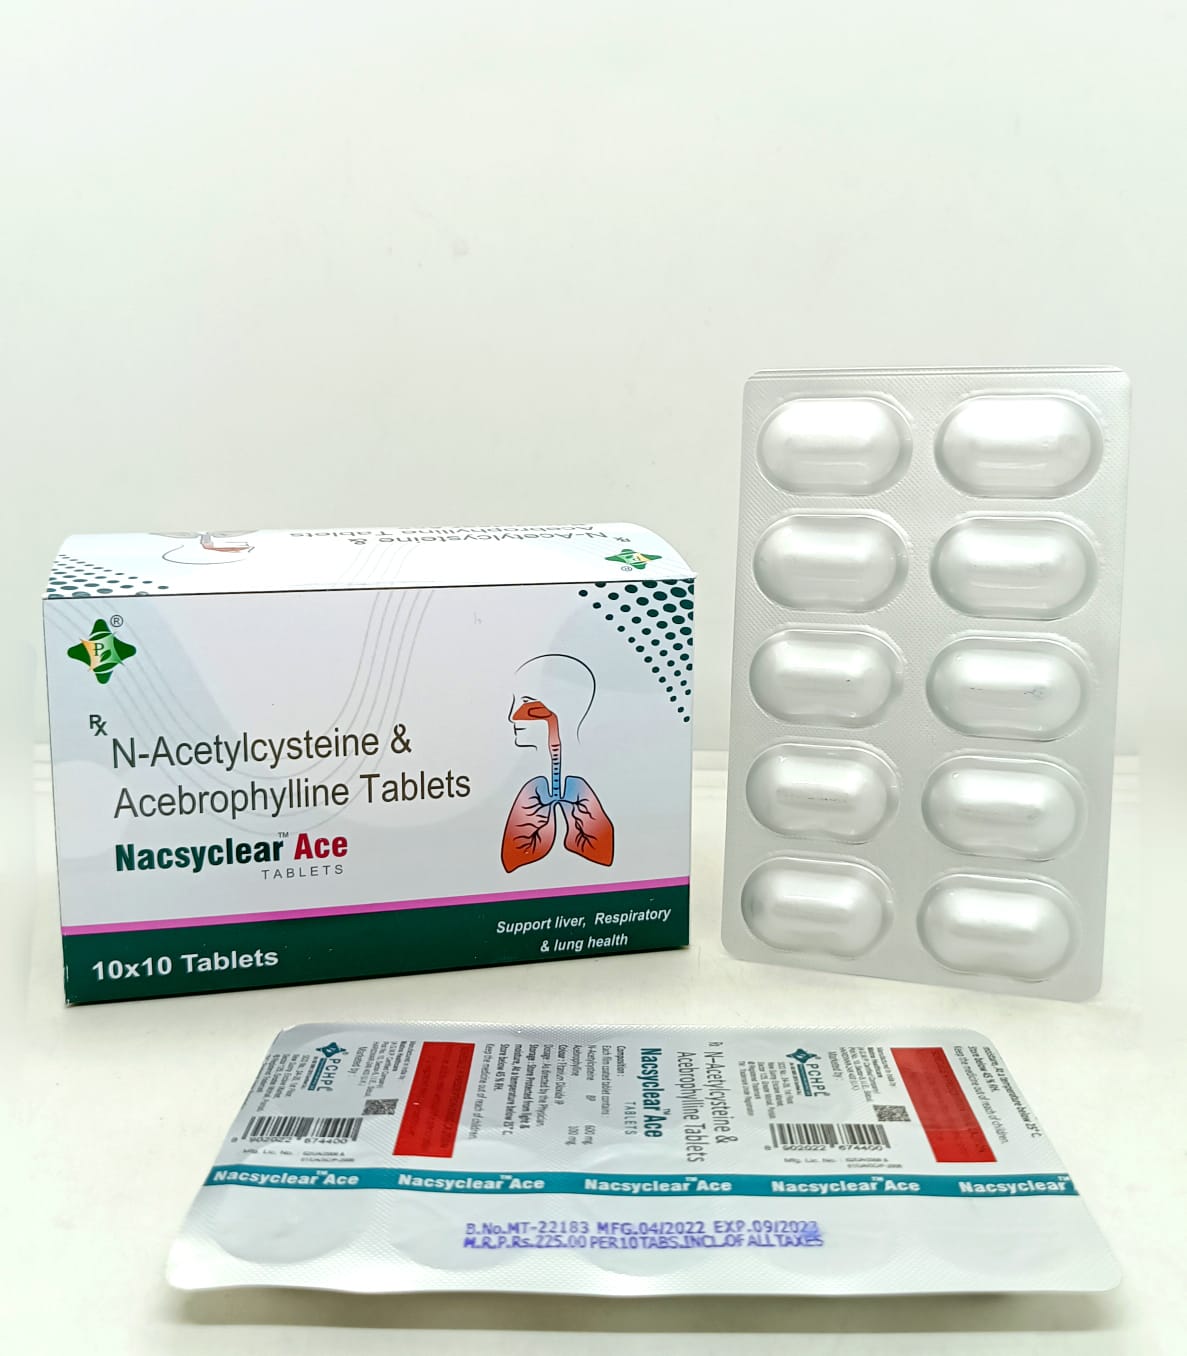 N-Acetylcysteine & Acebrophylline tablets